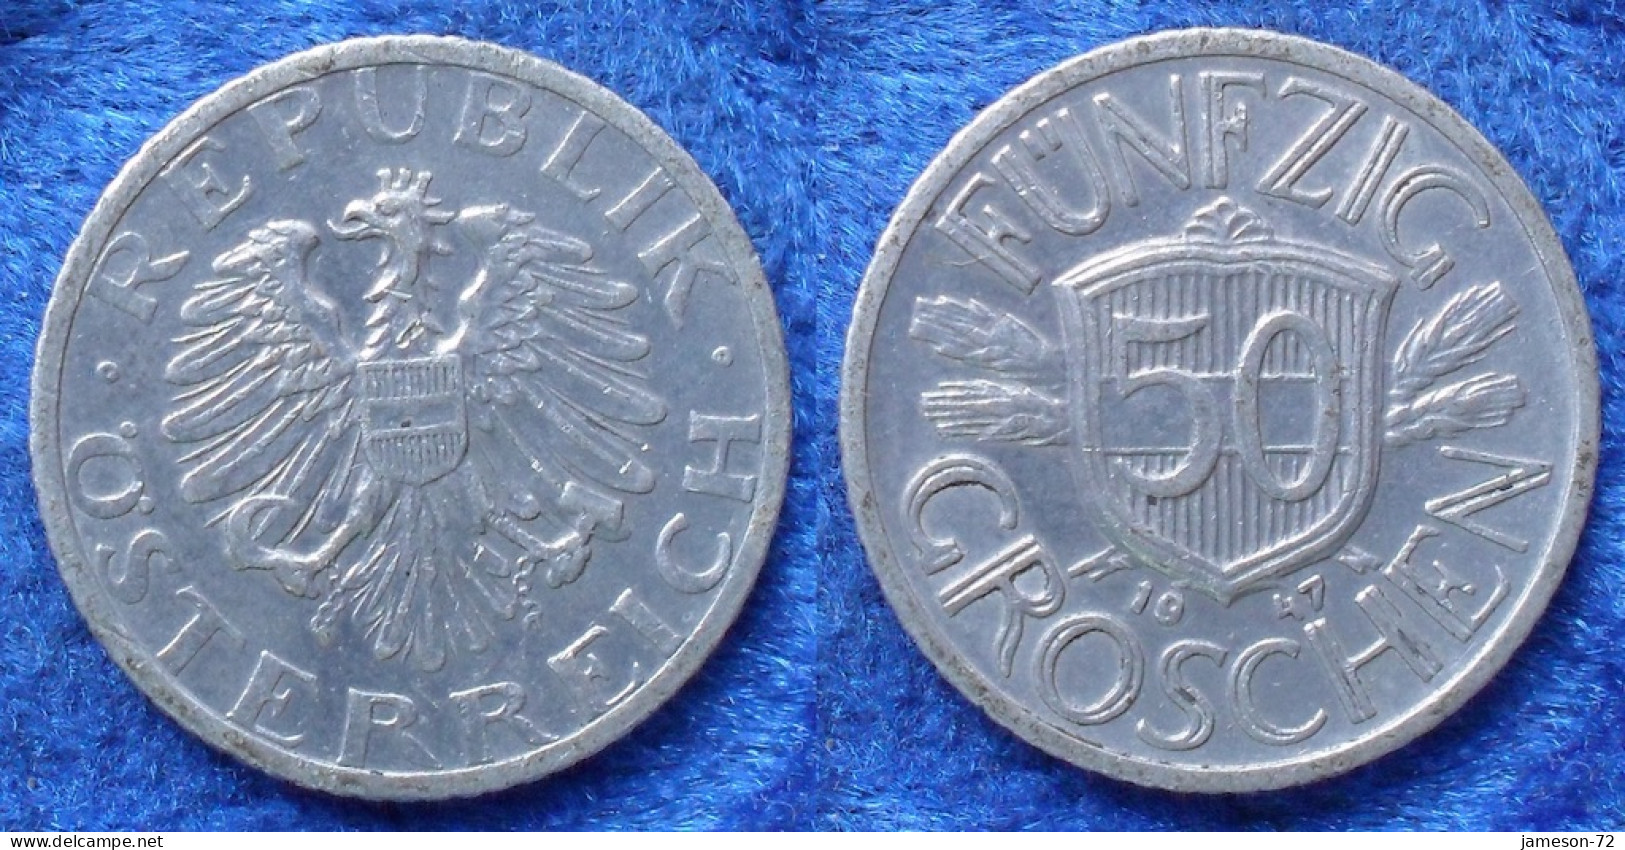 AUSTRIA - 50 Groschen 1947 KM# 2870 Republic Post-WWII Decimal Coinage (1947) - Edelweiss Coins - Autriche